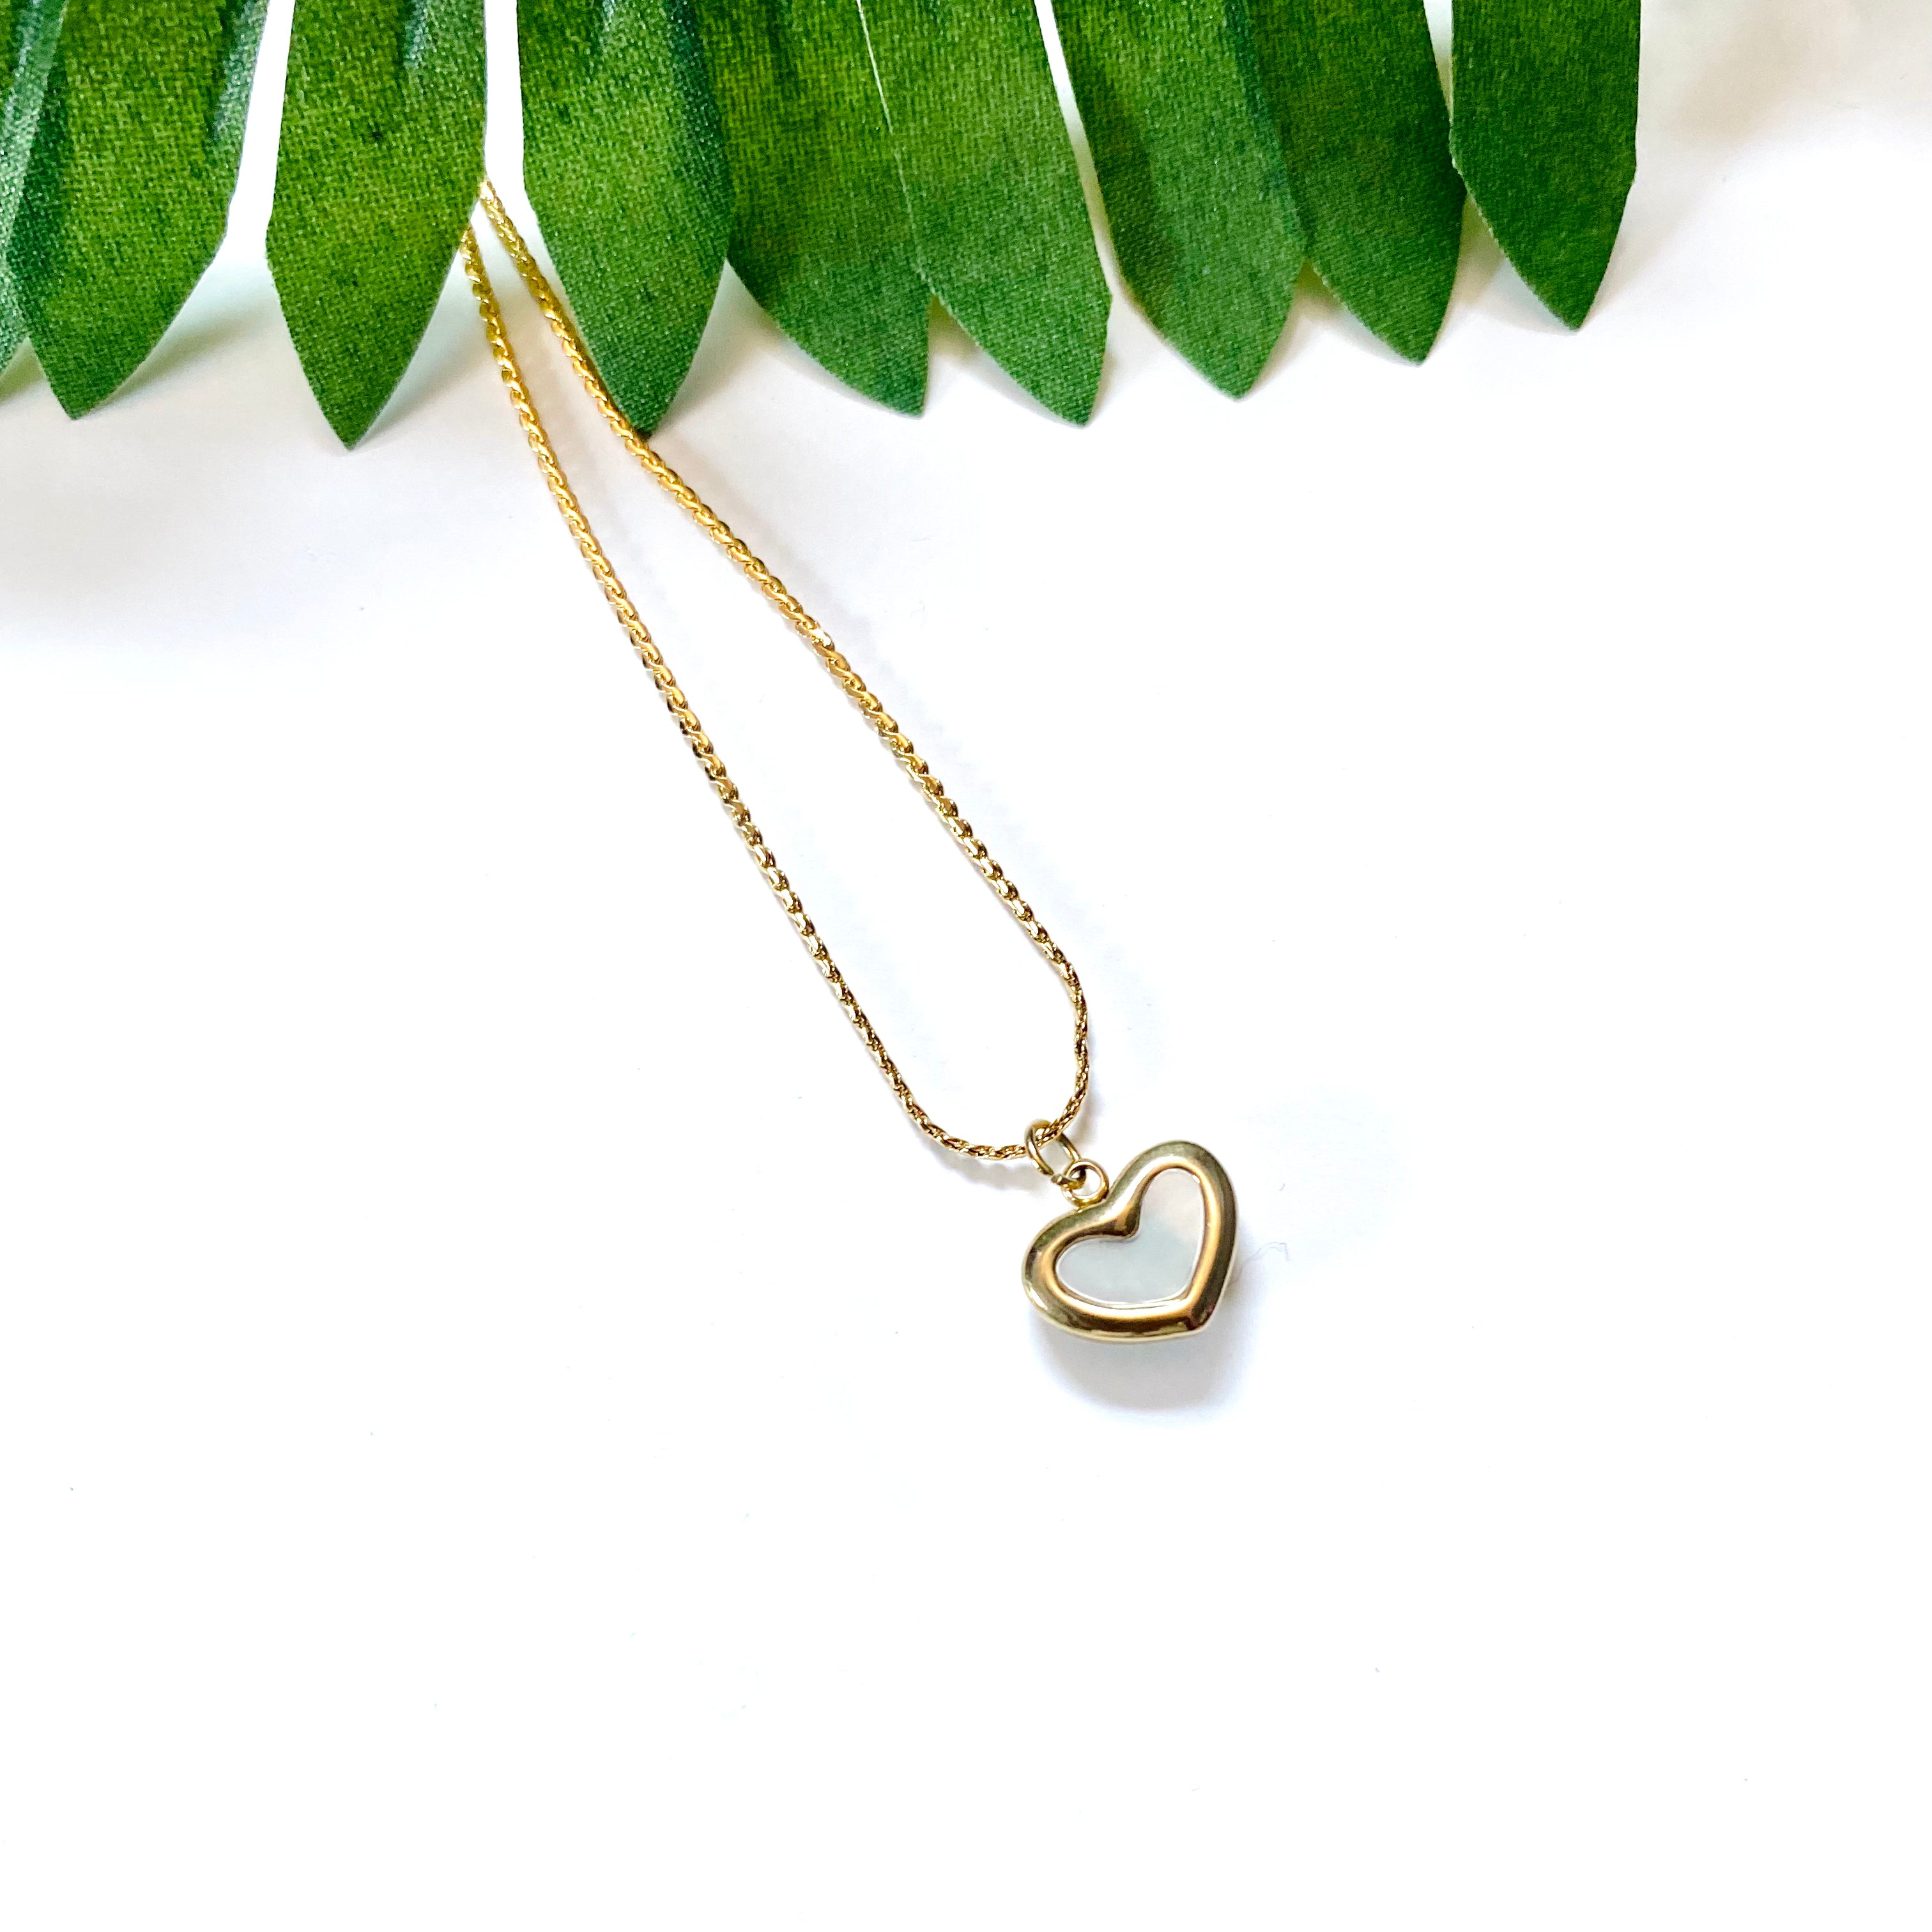 “Forever” Heart Necklace 18k